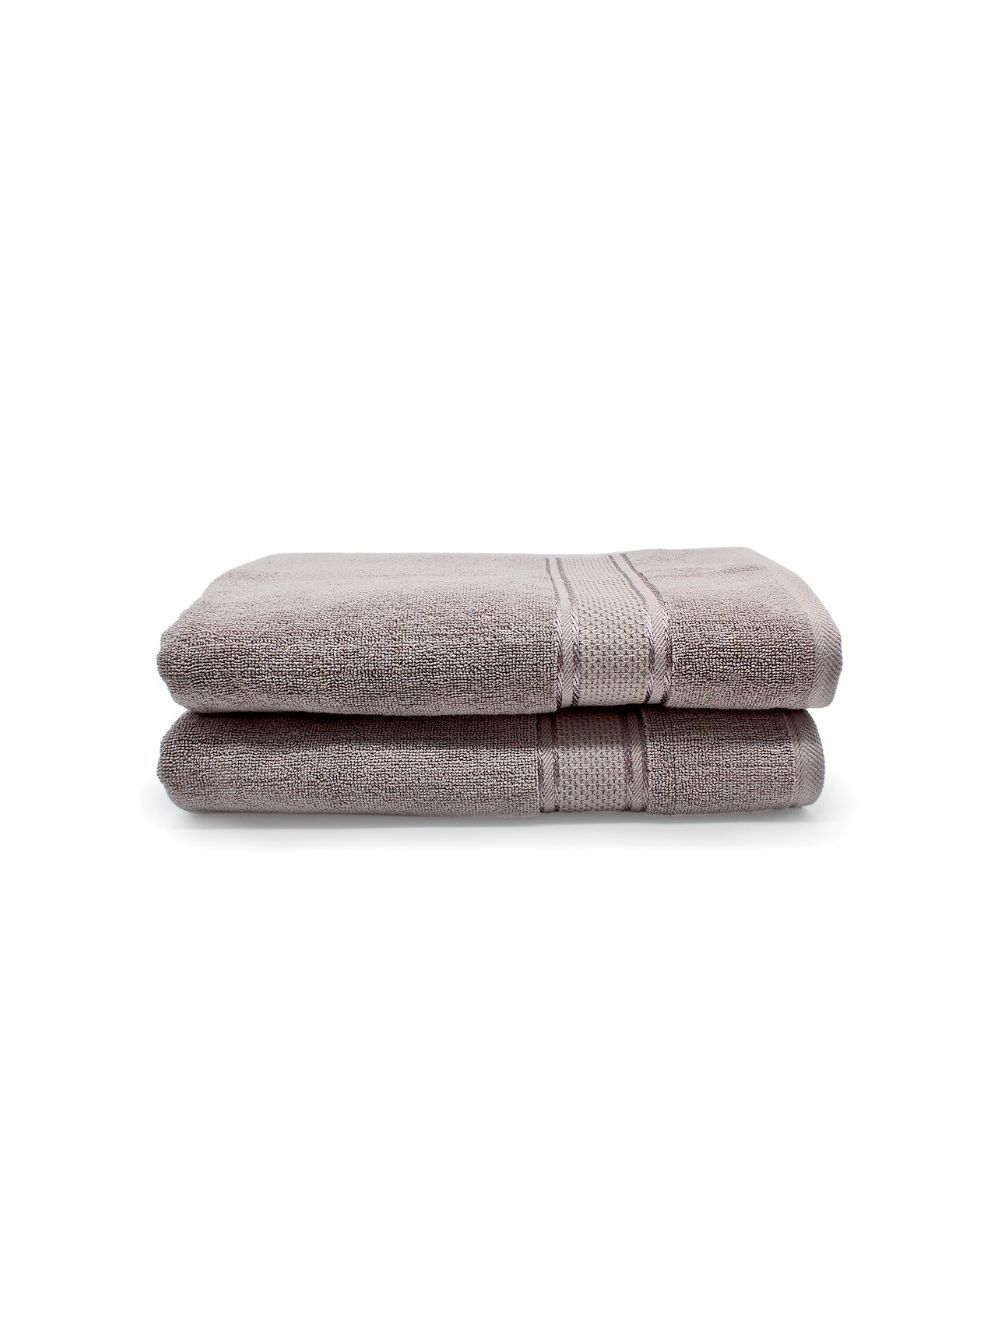 Rishahome 100% Cotton 2-Piece Bath Towel Set, Premium Collection-14RHFT061